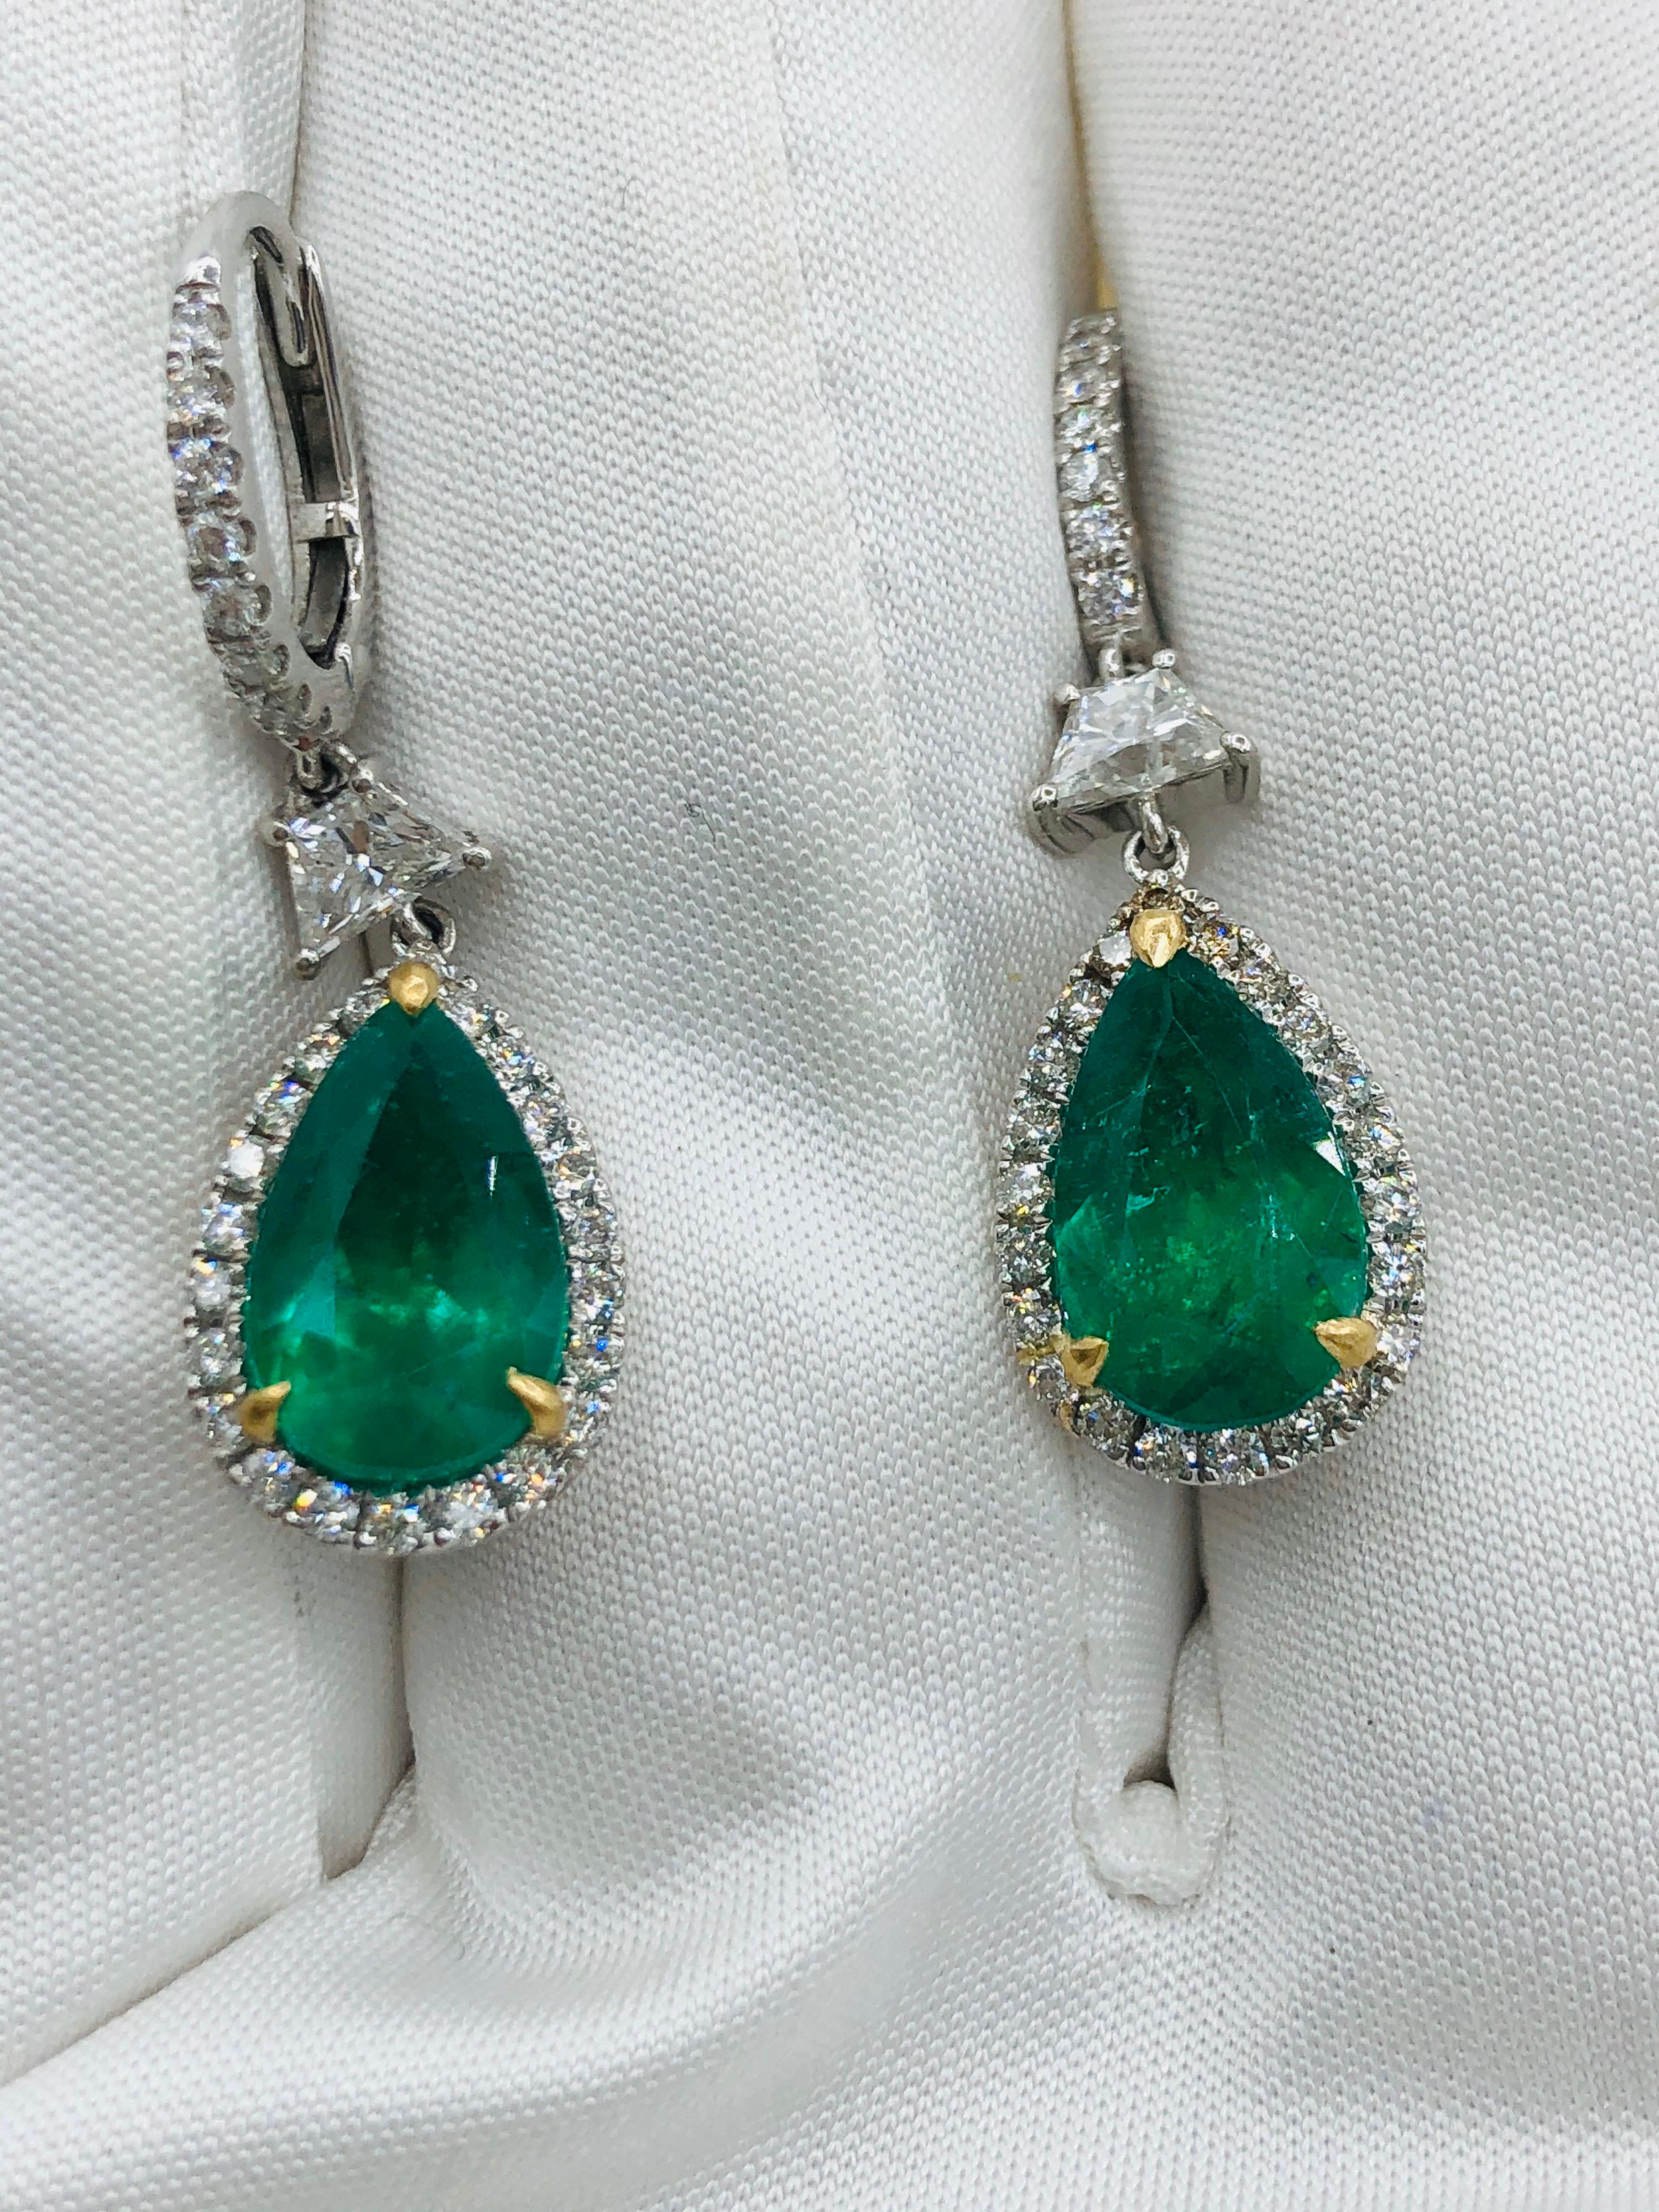 Emilio Jewelry Certified 6.70 Carat Vivid Green Colombian Emerald Earrings For Sale 3